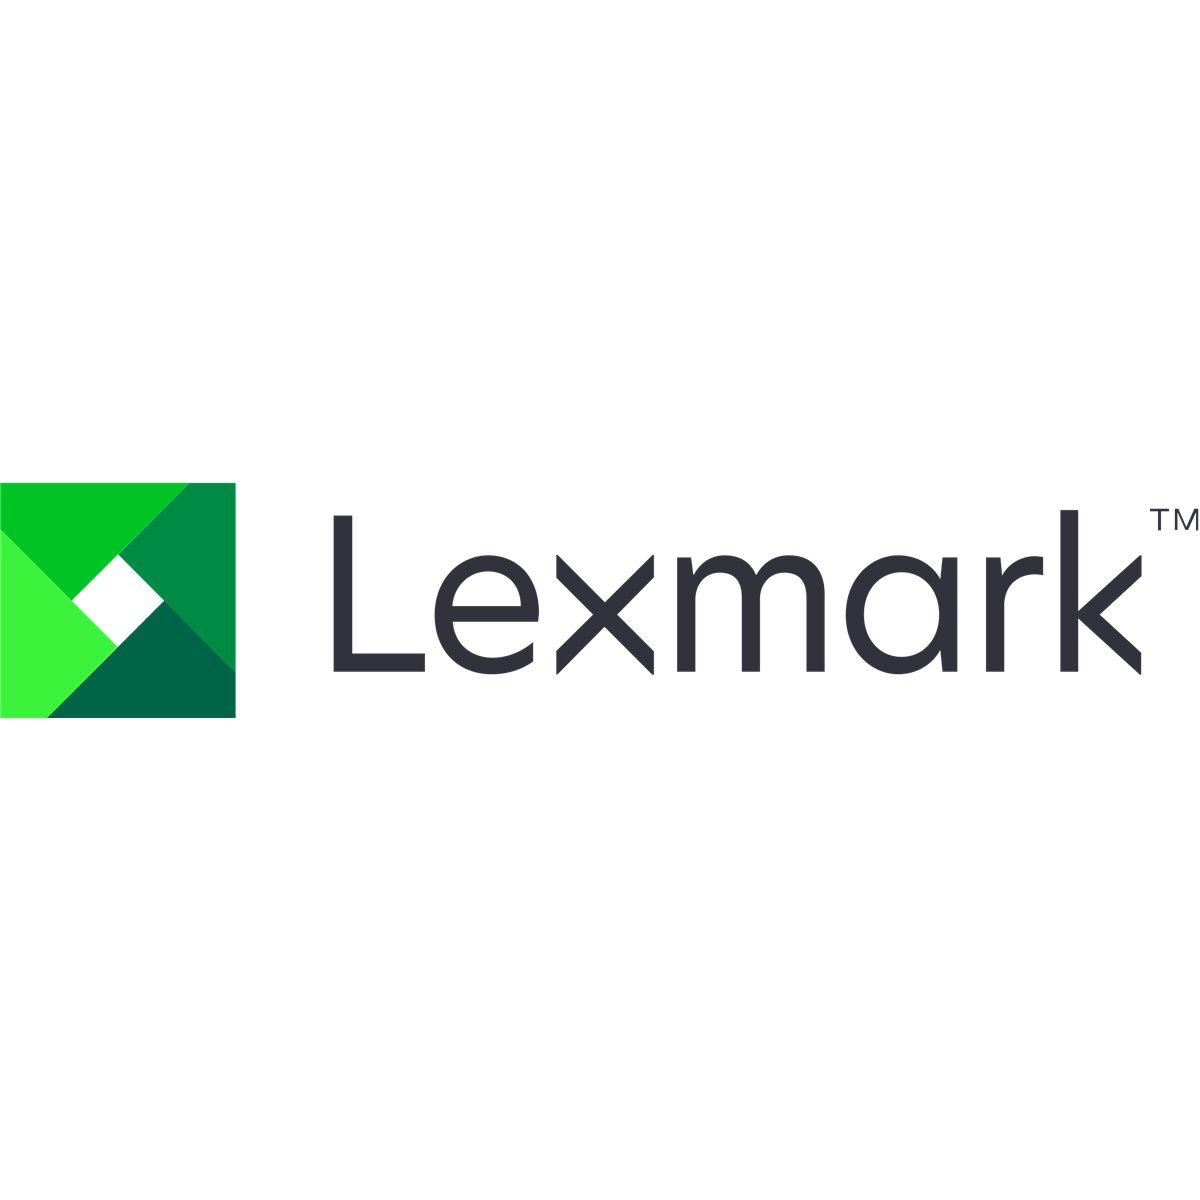 Lexmark Tray High Capacity Feeder